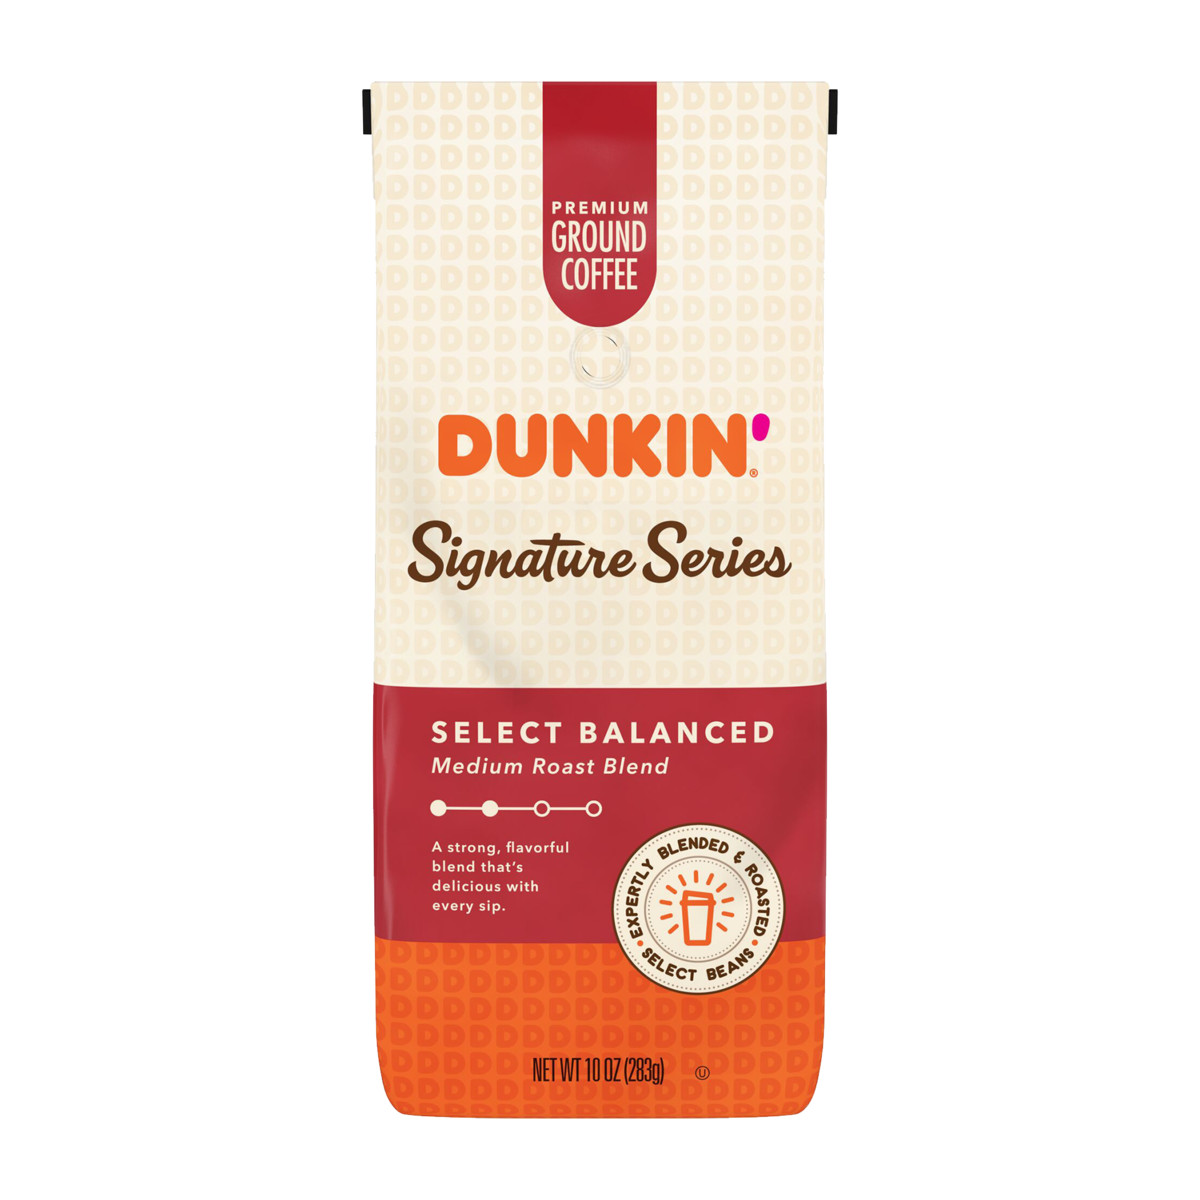 Dunkin'® Signature Series Select Balanced medium roast ground coffee in an orange, red, and cream bag